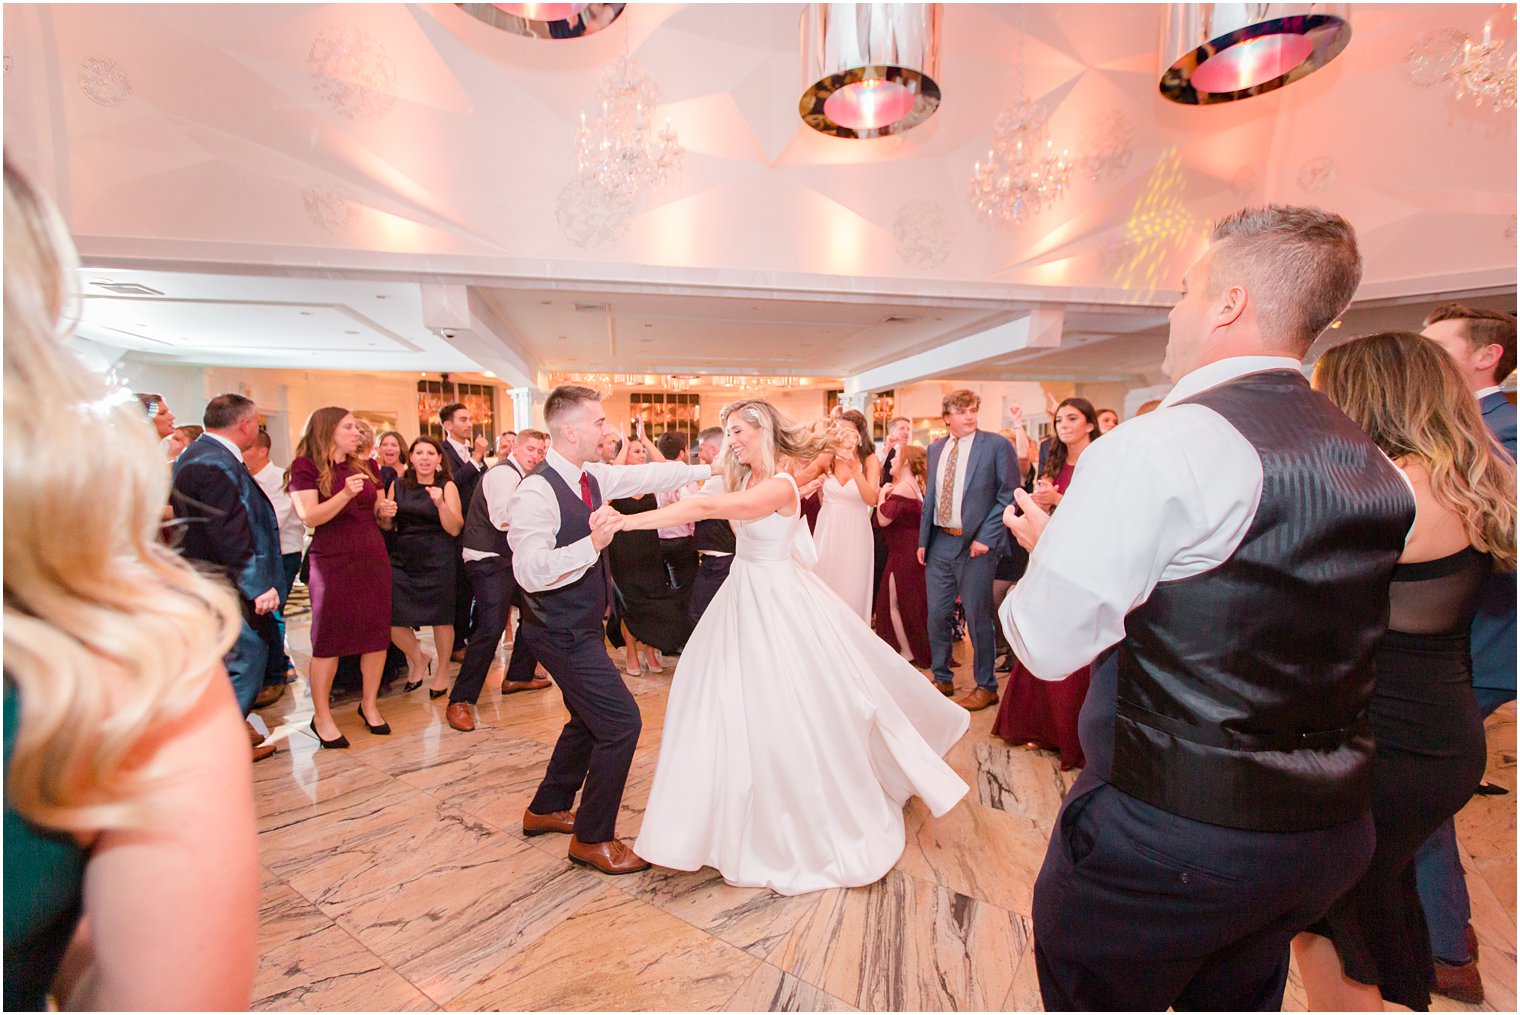 Westmount Country Club Wedding reception fun photographed by Idalia Photography